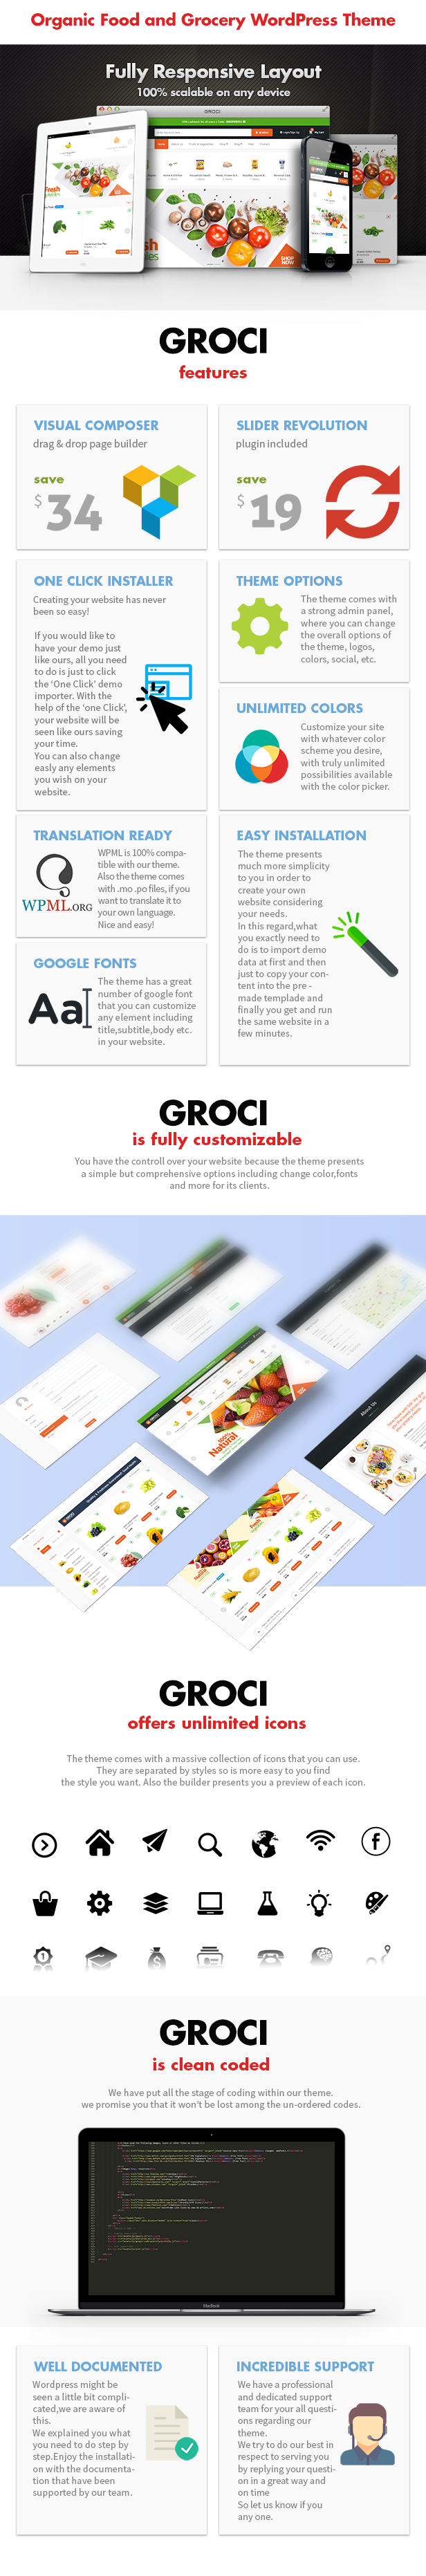 groci desc2 - Groci - Organic Food and Grocery Market WordPress Theme